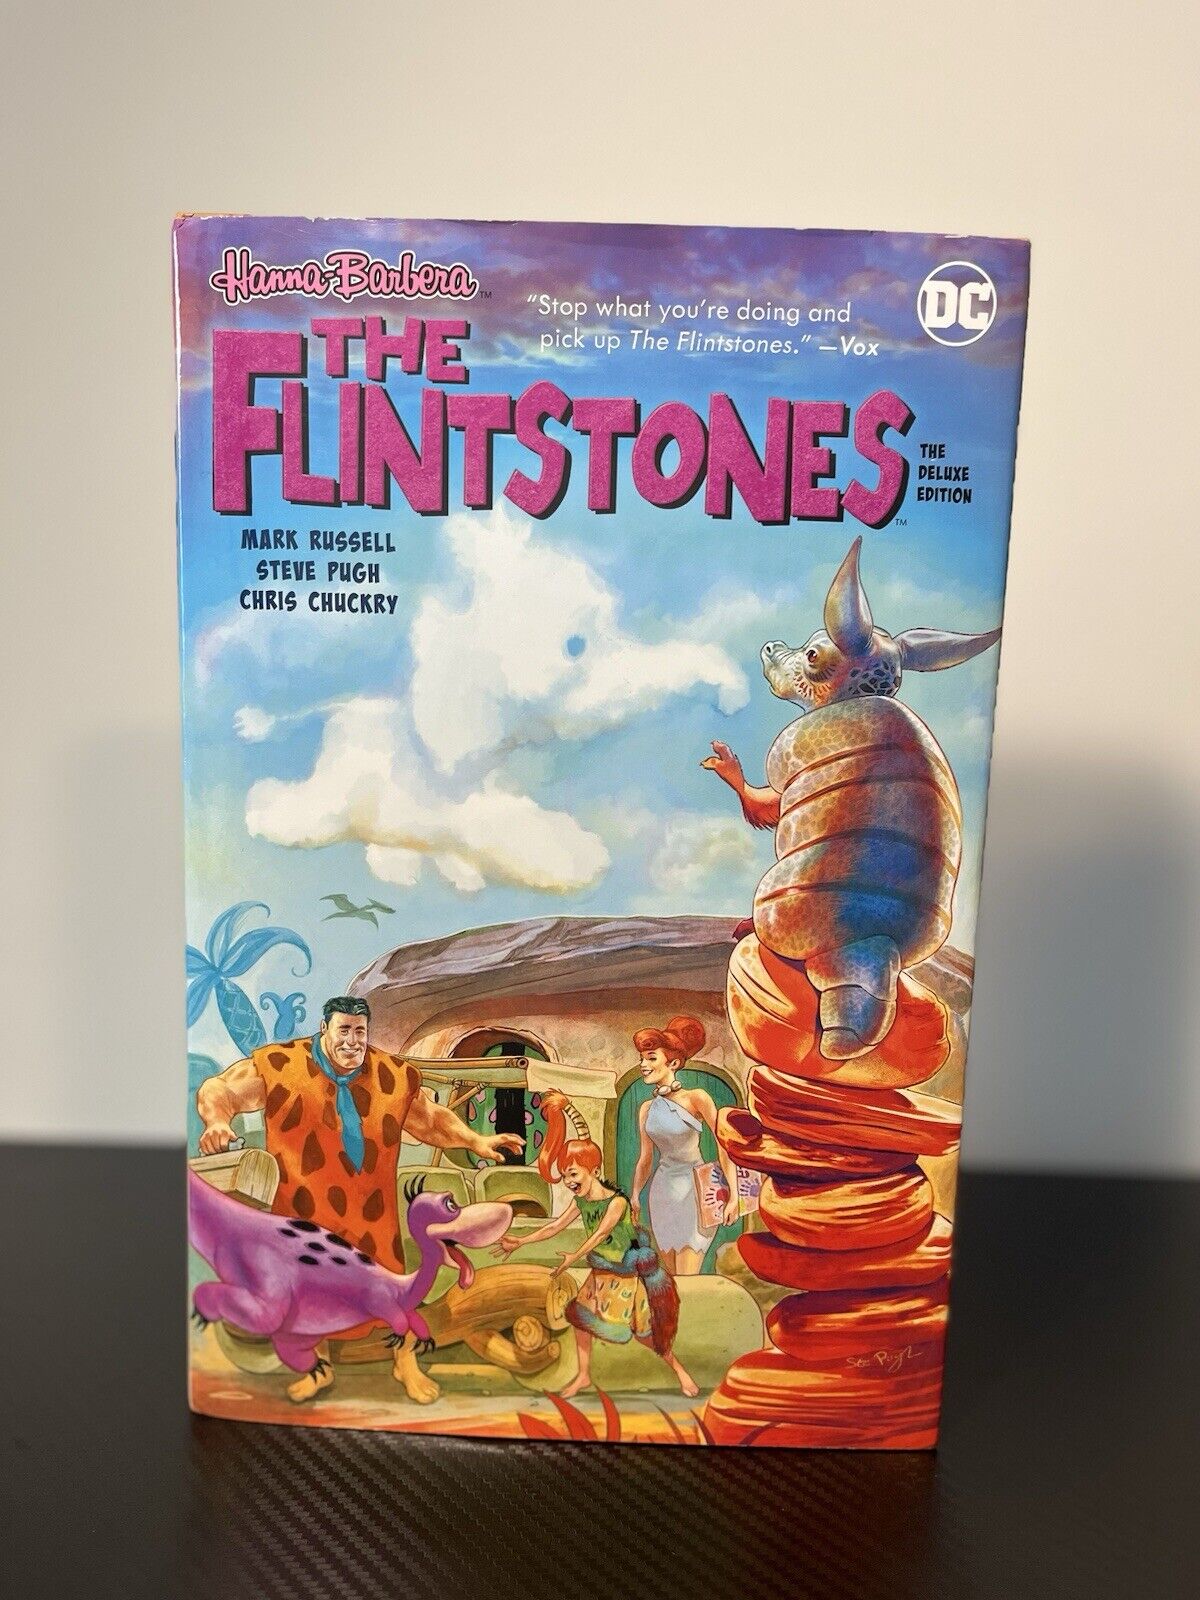 The Flinstones Hardcover Graphic Novel (DC)